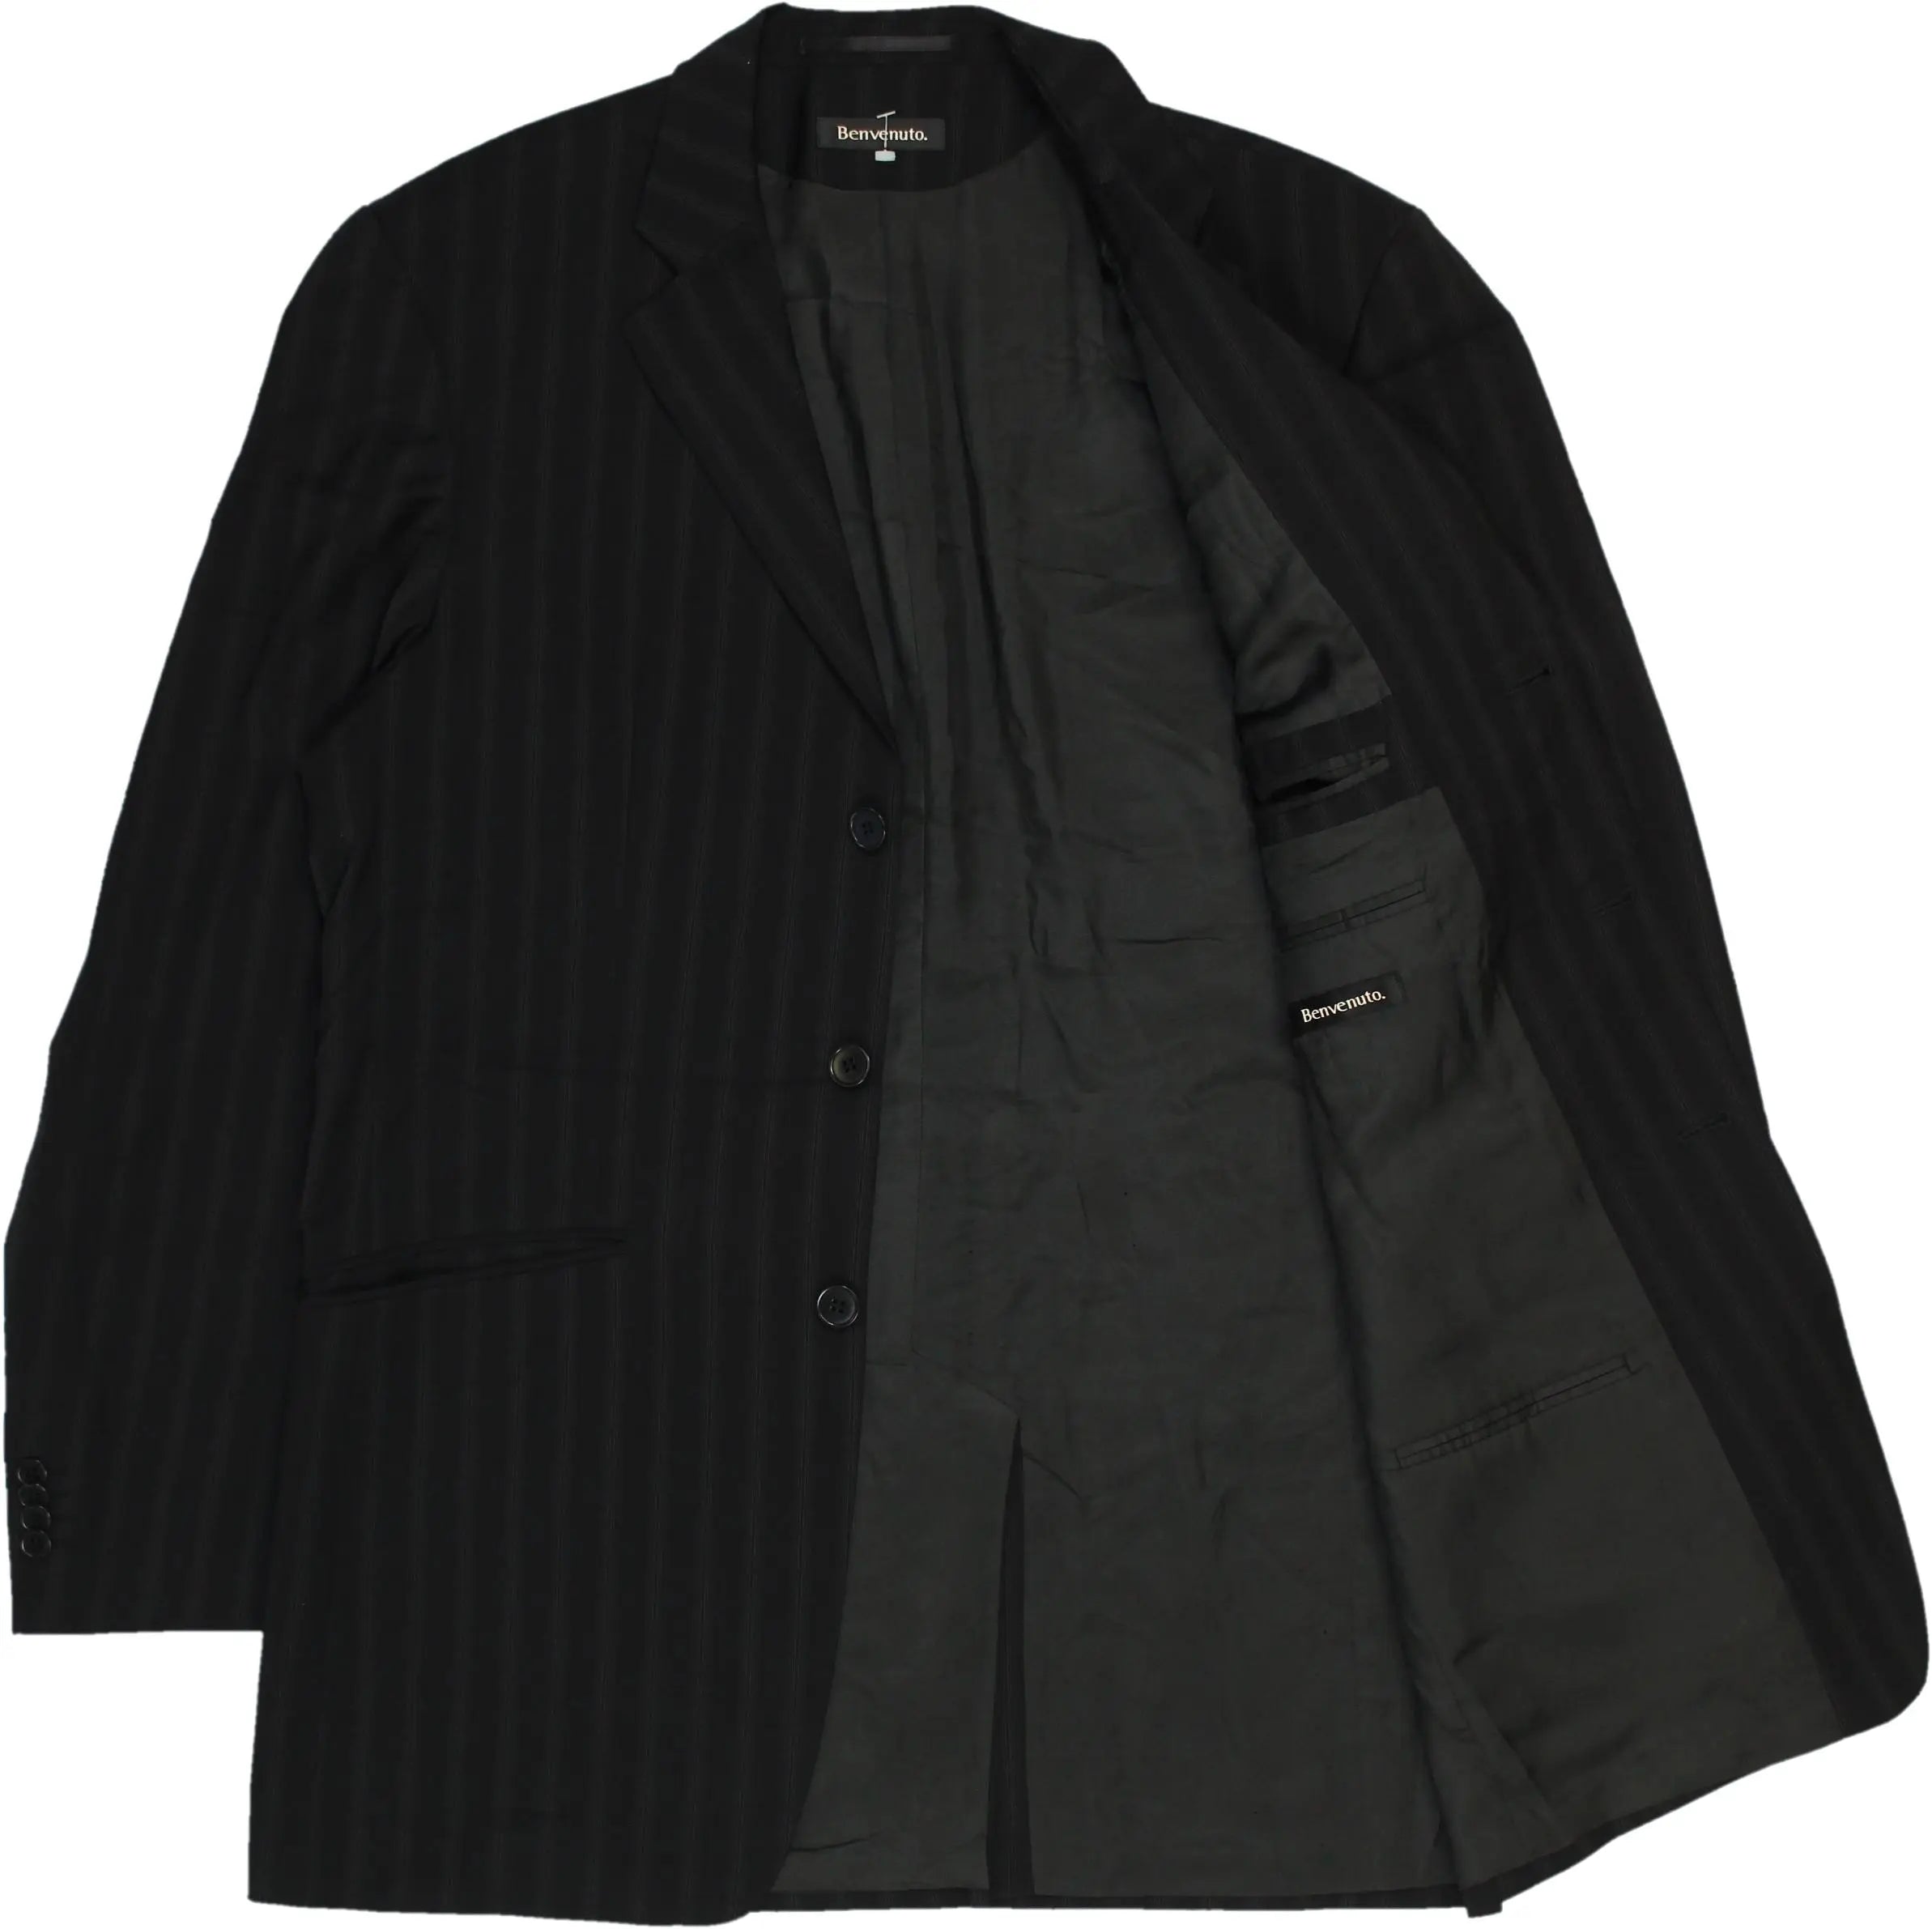 Benvenuto - Black Striped Blazer by Benvenuto- ThriftTale.com - Vintage and second handclothing